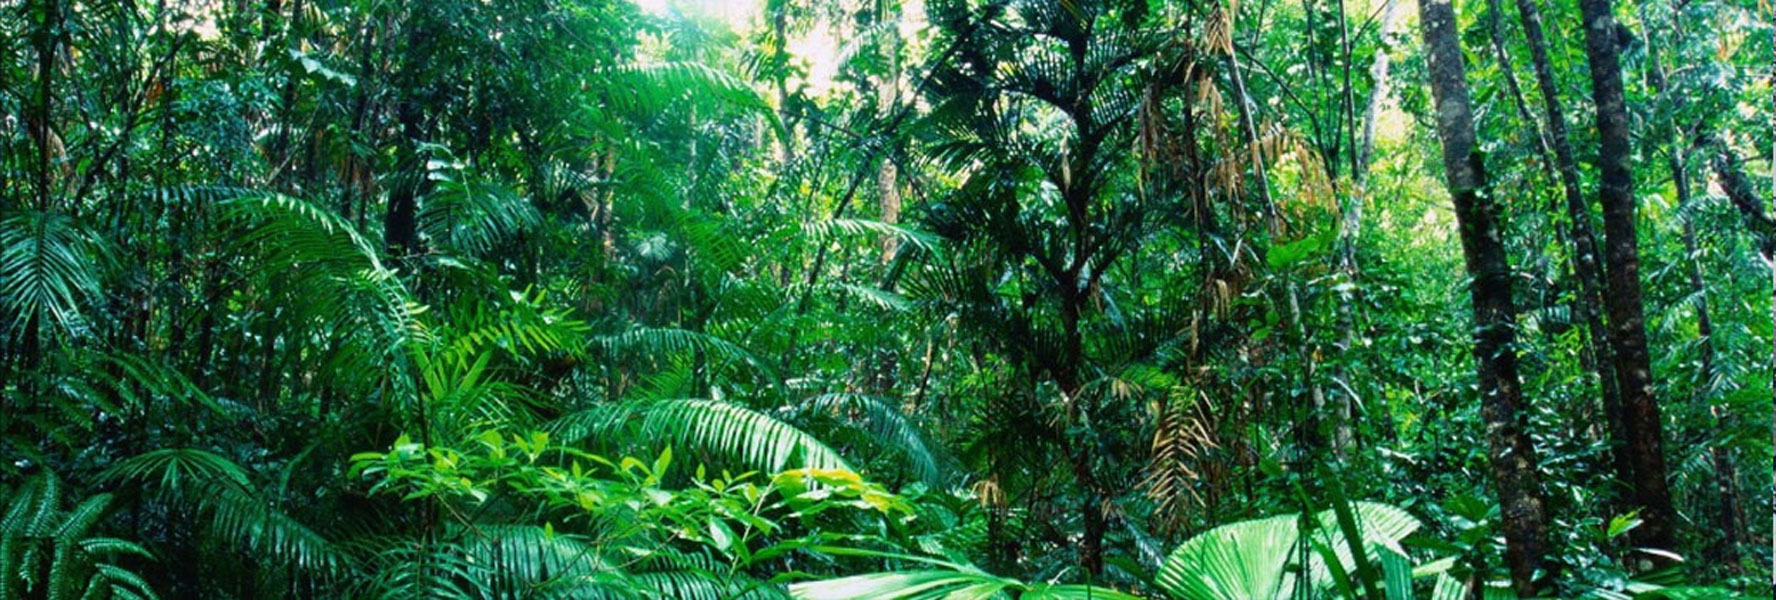 Тропический лес панорама